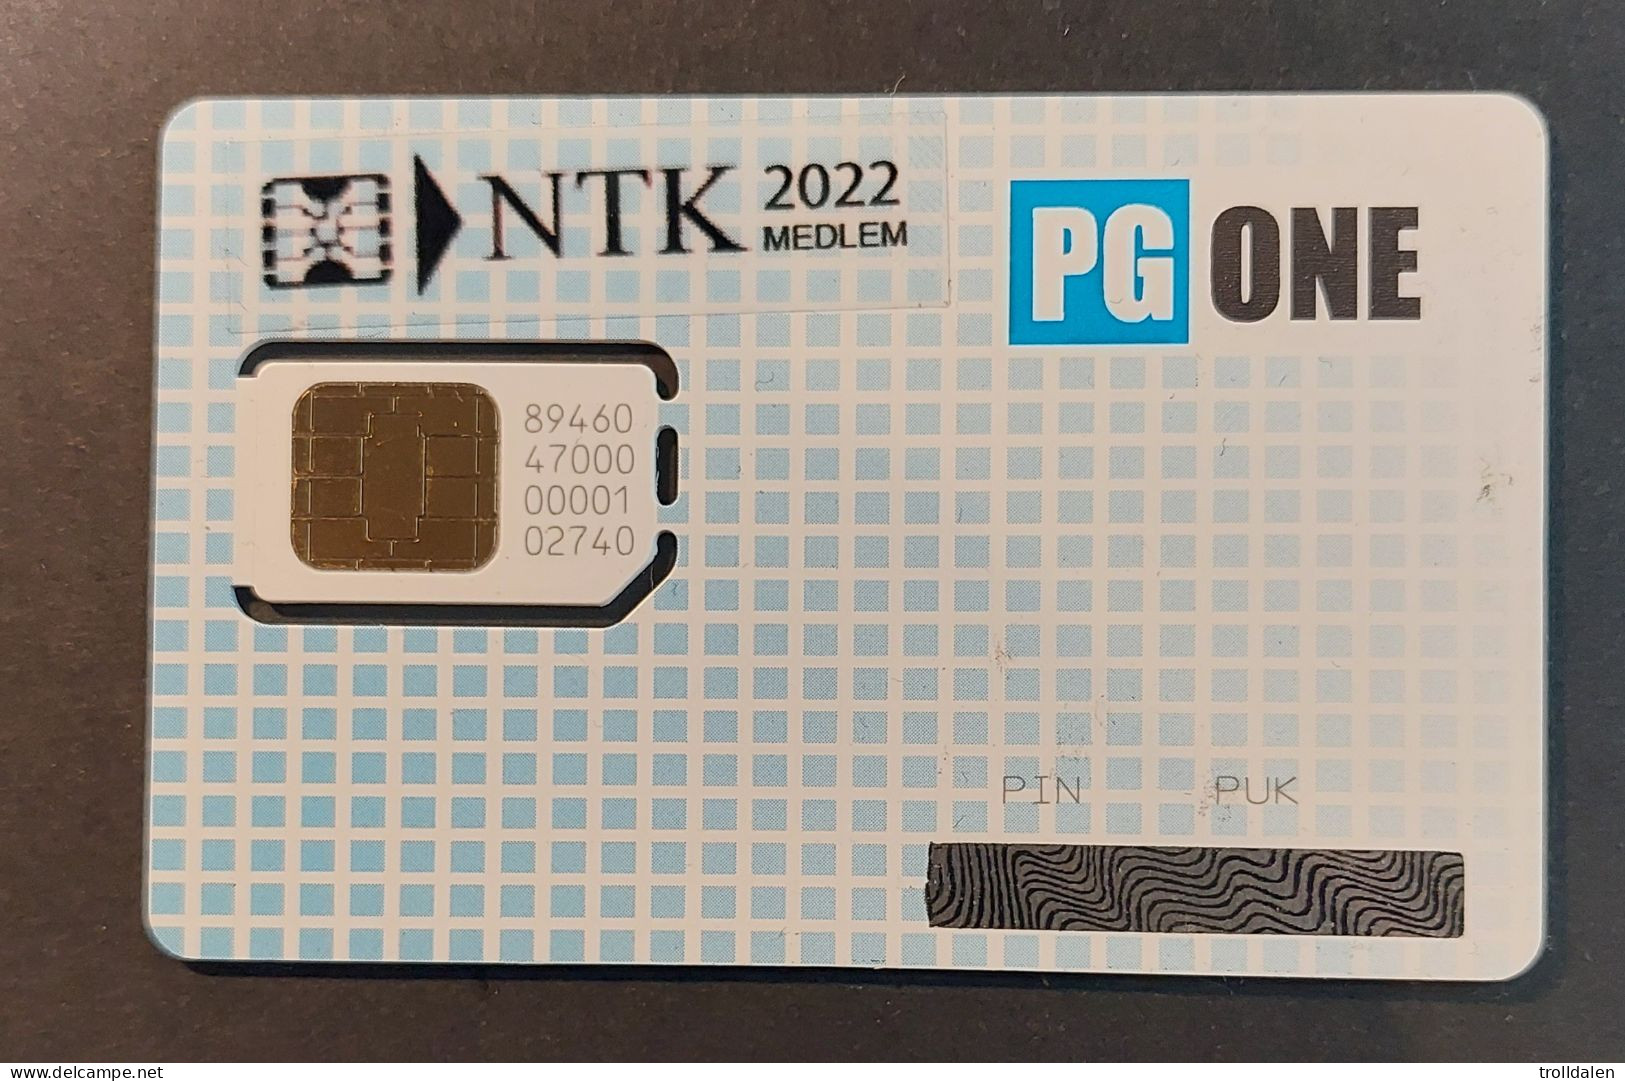 NTK Memberscard 2022 - Norvegia